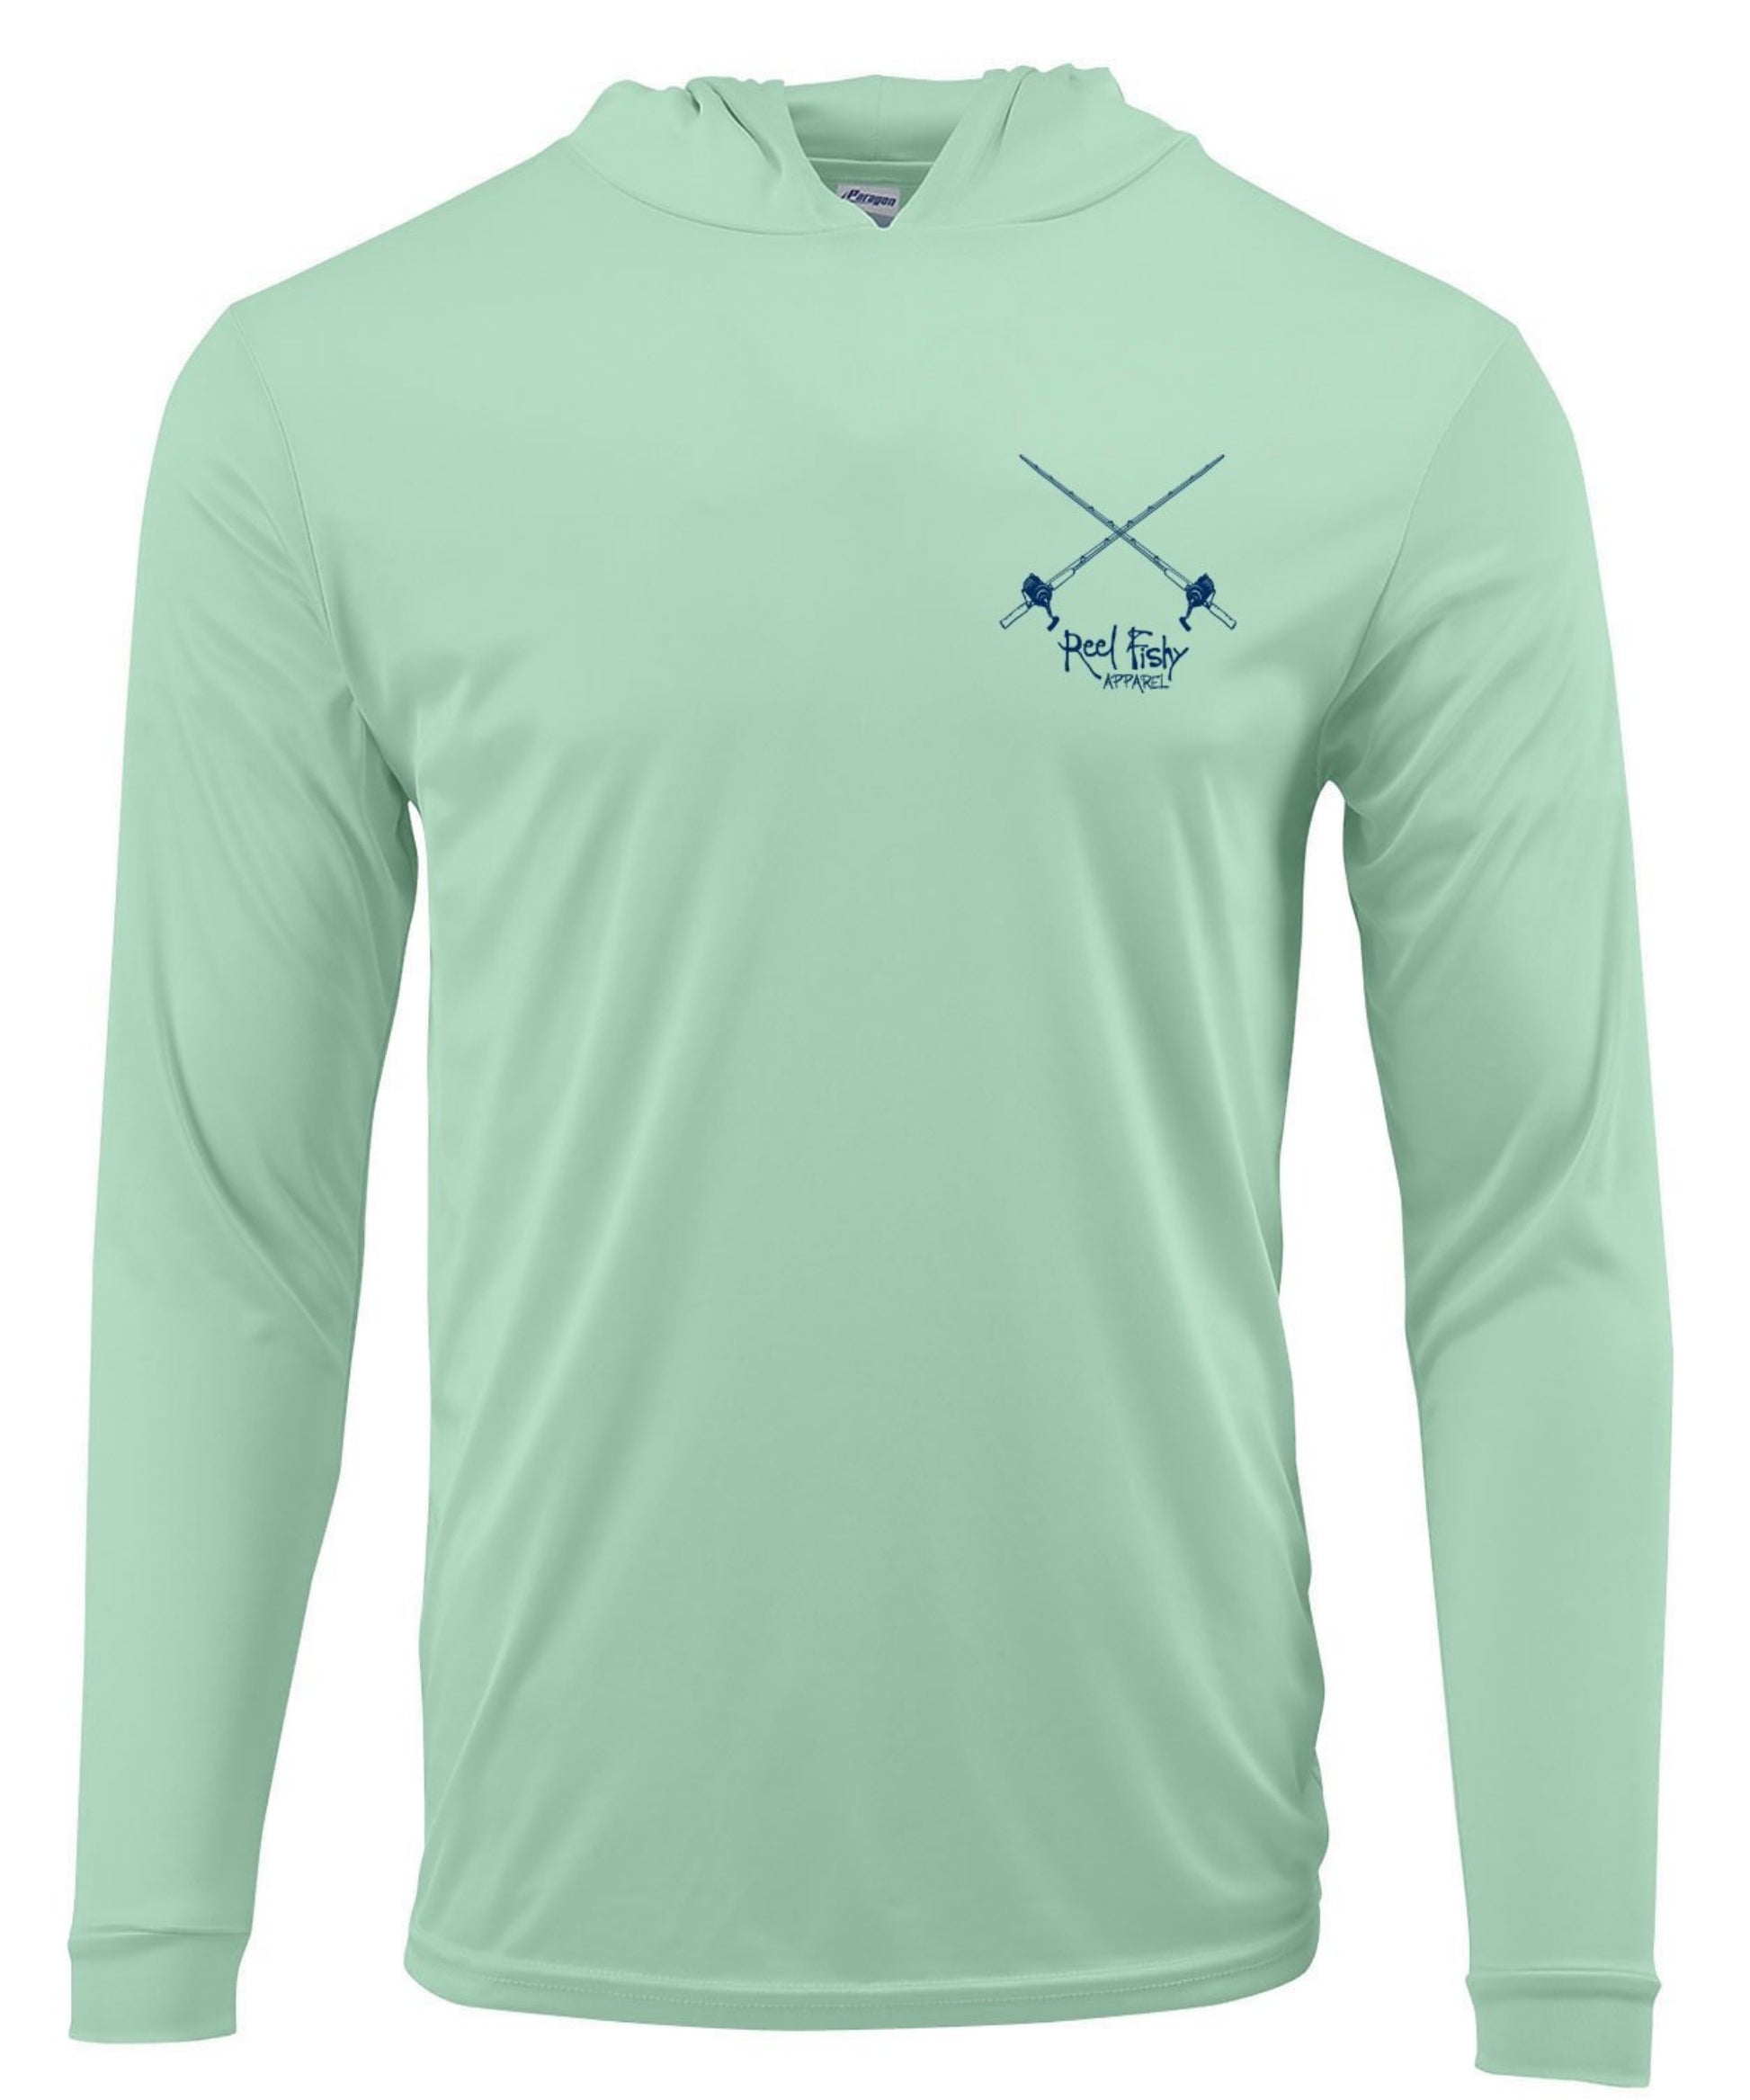 Seagrass Tarpon Hoodie Performance Dry-Fit Fishing Long Sleeve Shirts, 50+ UPF Sun Protection  - Reel Fishy Apparel Salt Rod Logo on front